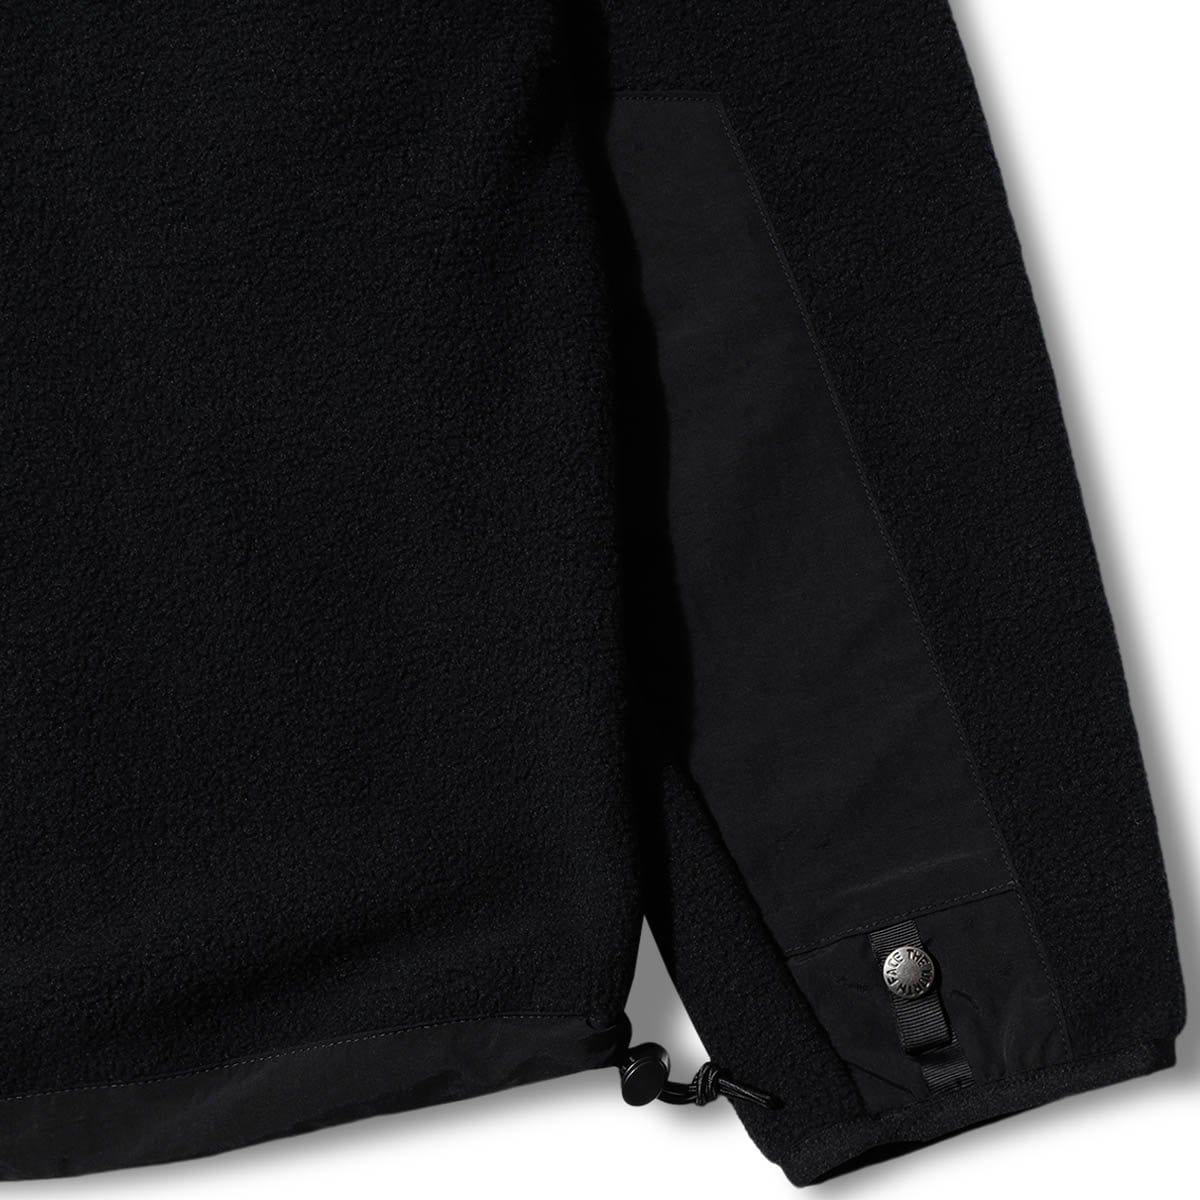 The North Face Black Series Outerwear 95 RETRO DENALI JACKET